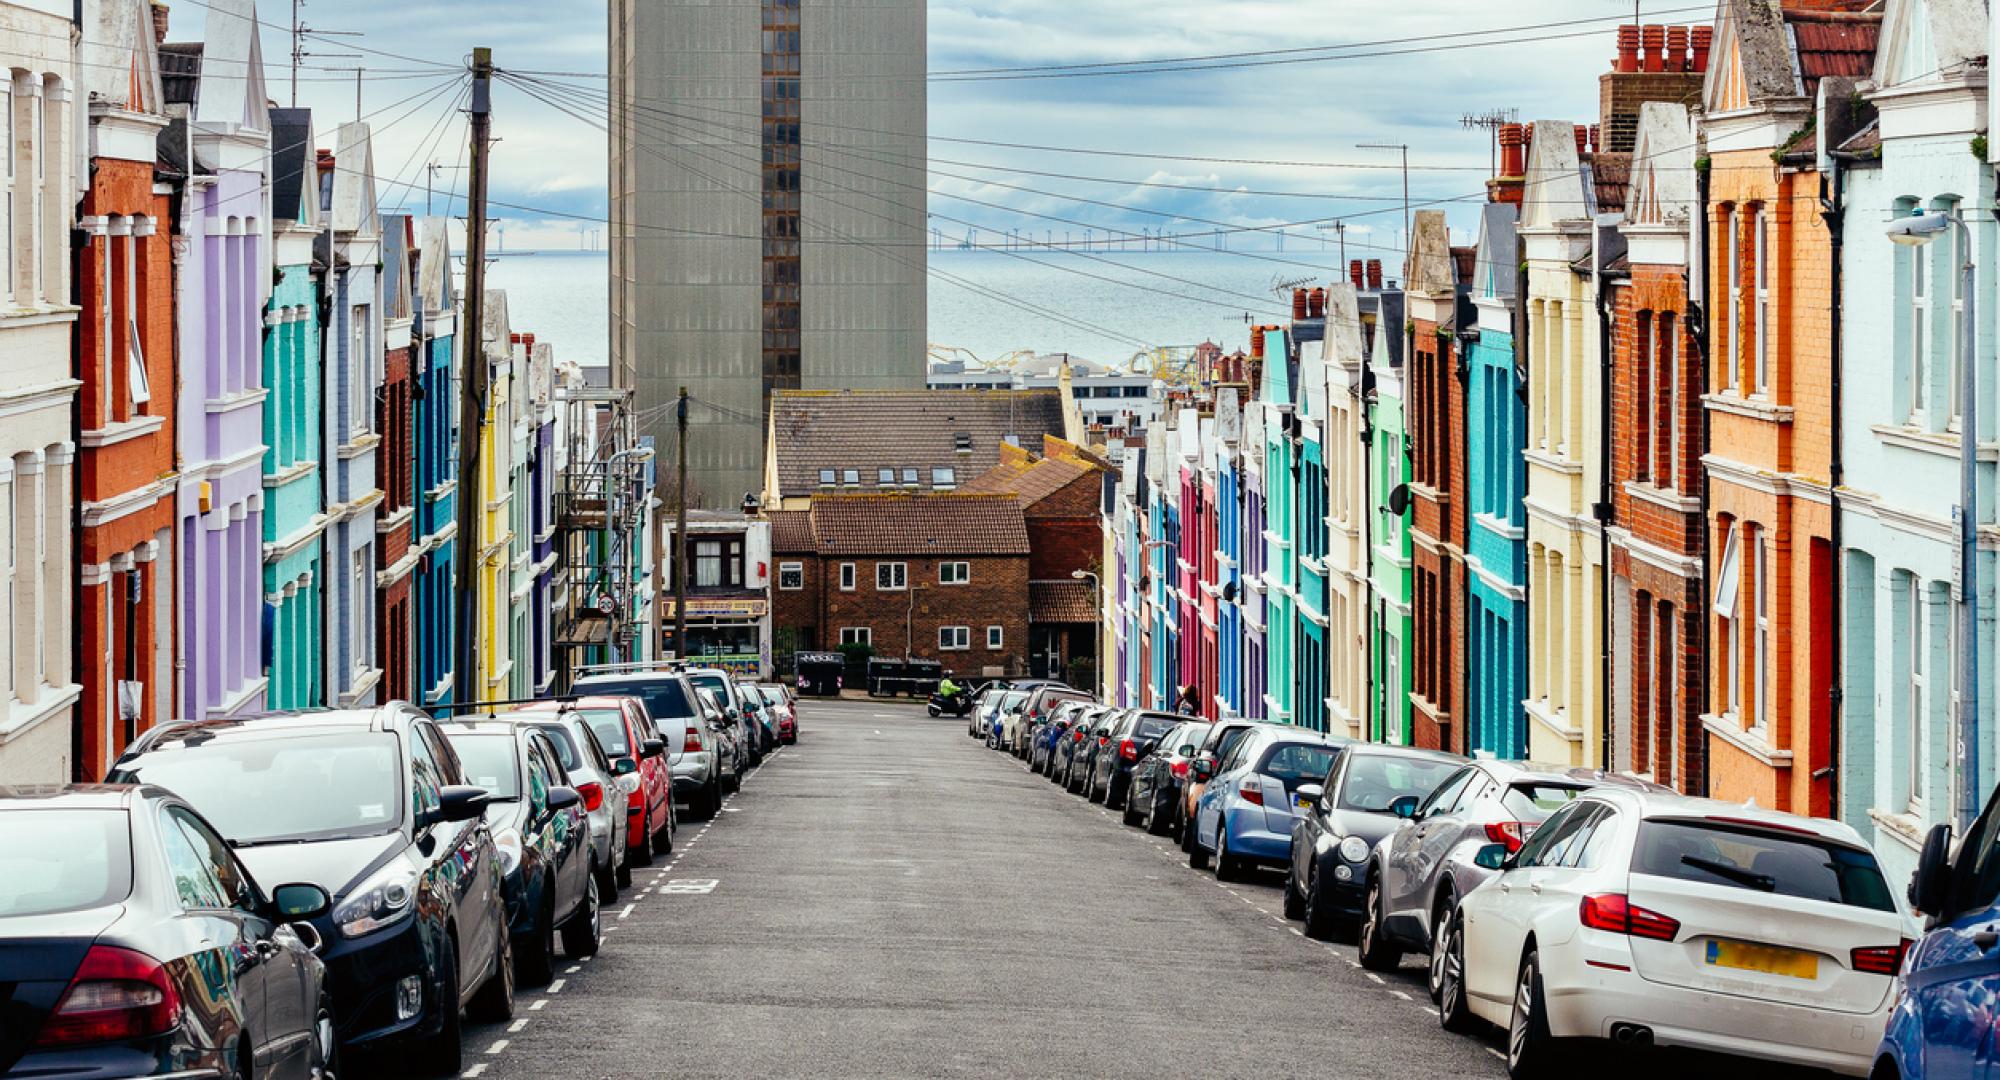 A street in Brighton